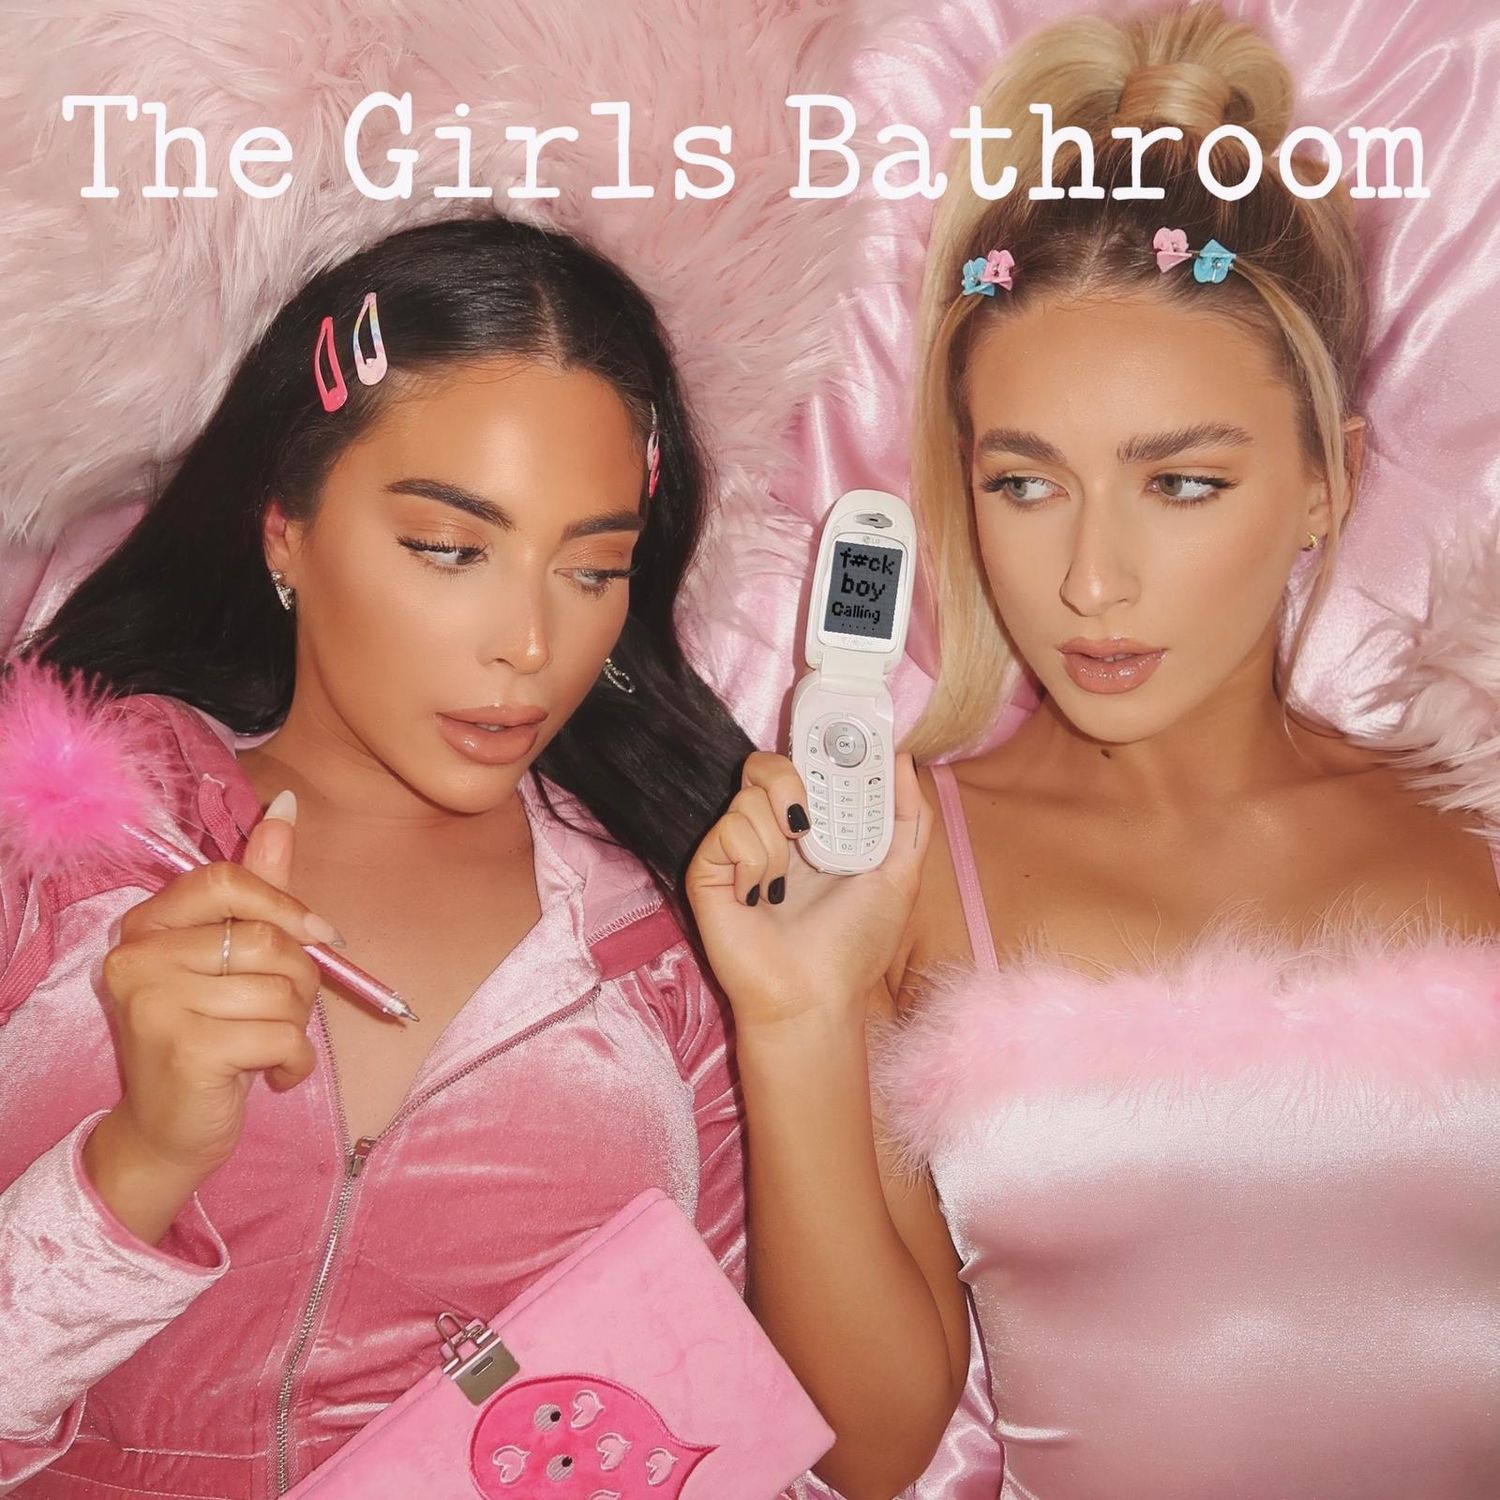 Billets The Girls Bathroom (Royal Albert Hall - Londres)